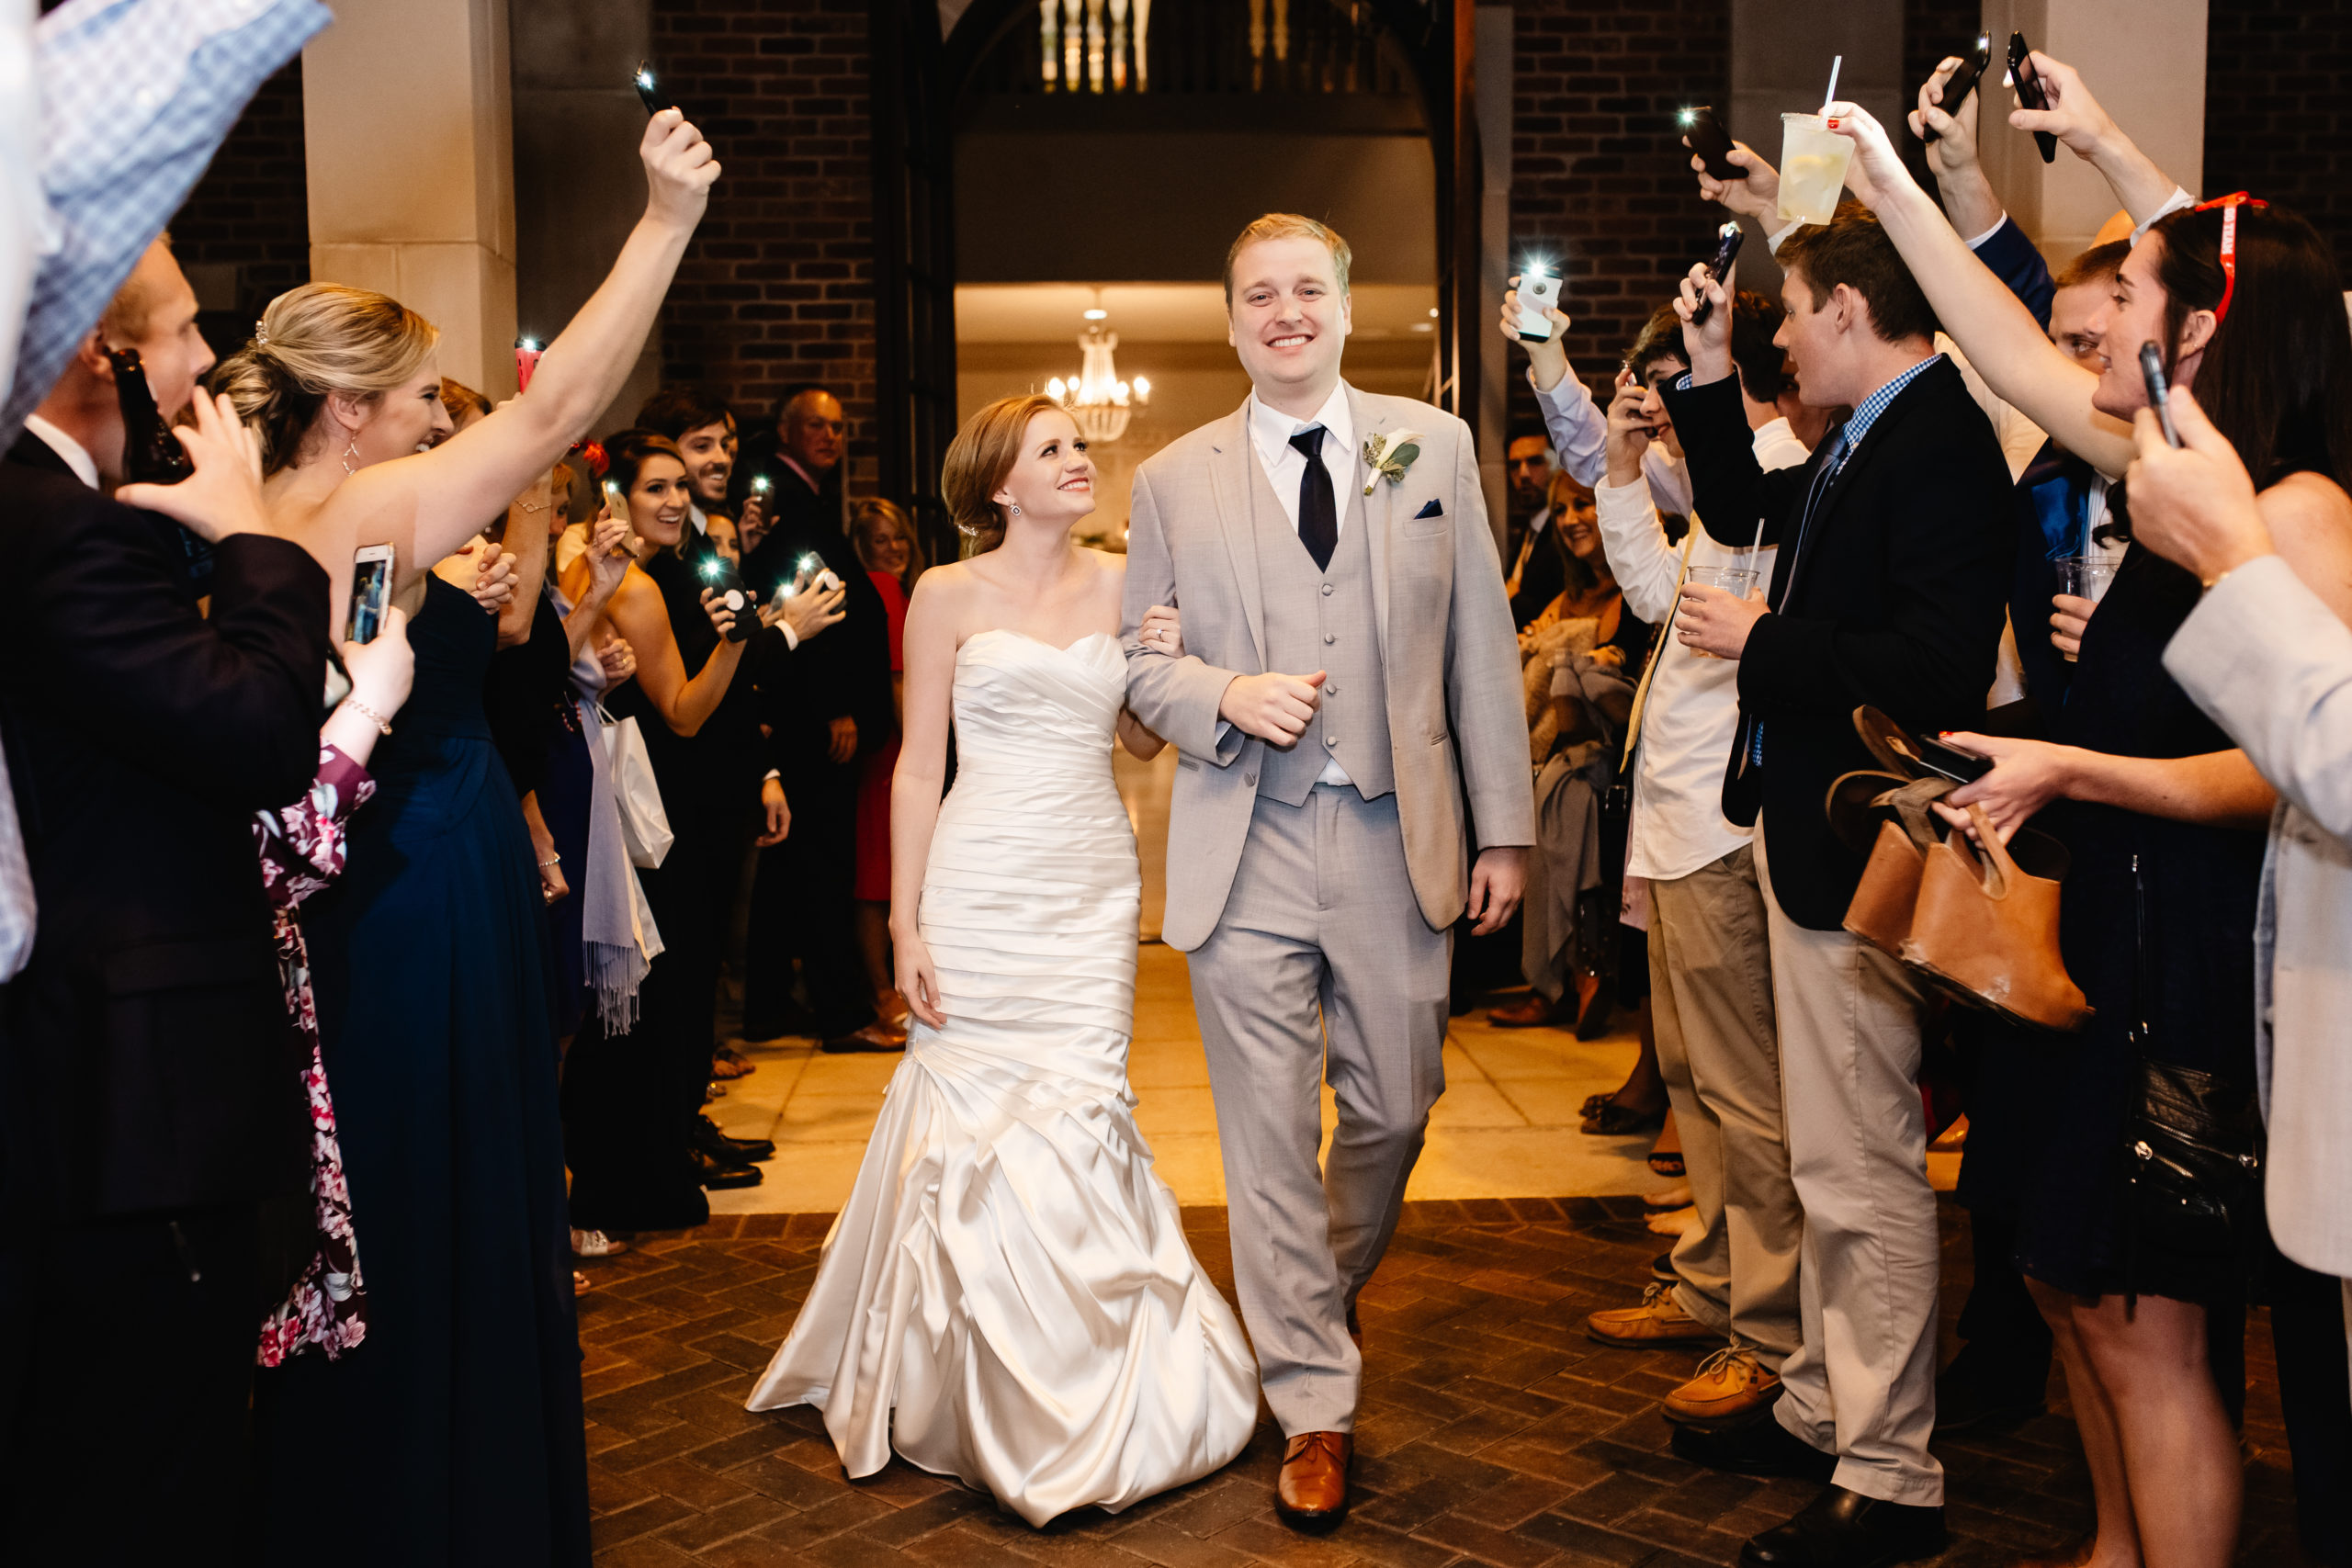 Wedding Reception Exits with iPhone Flashlights